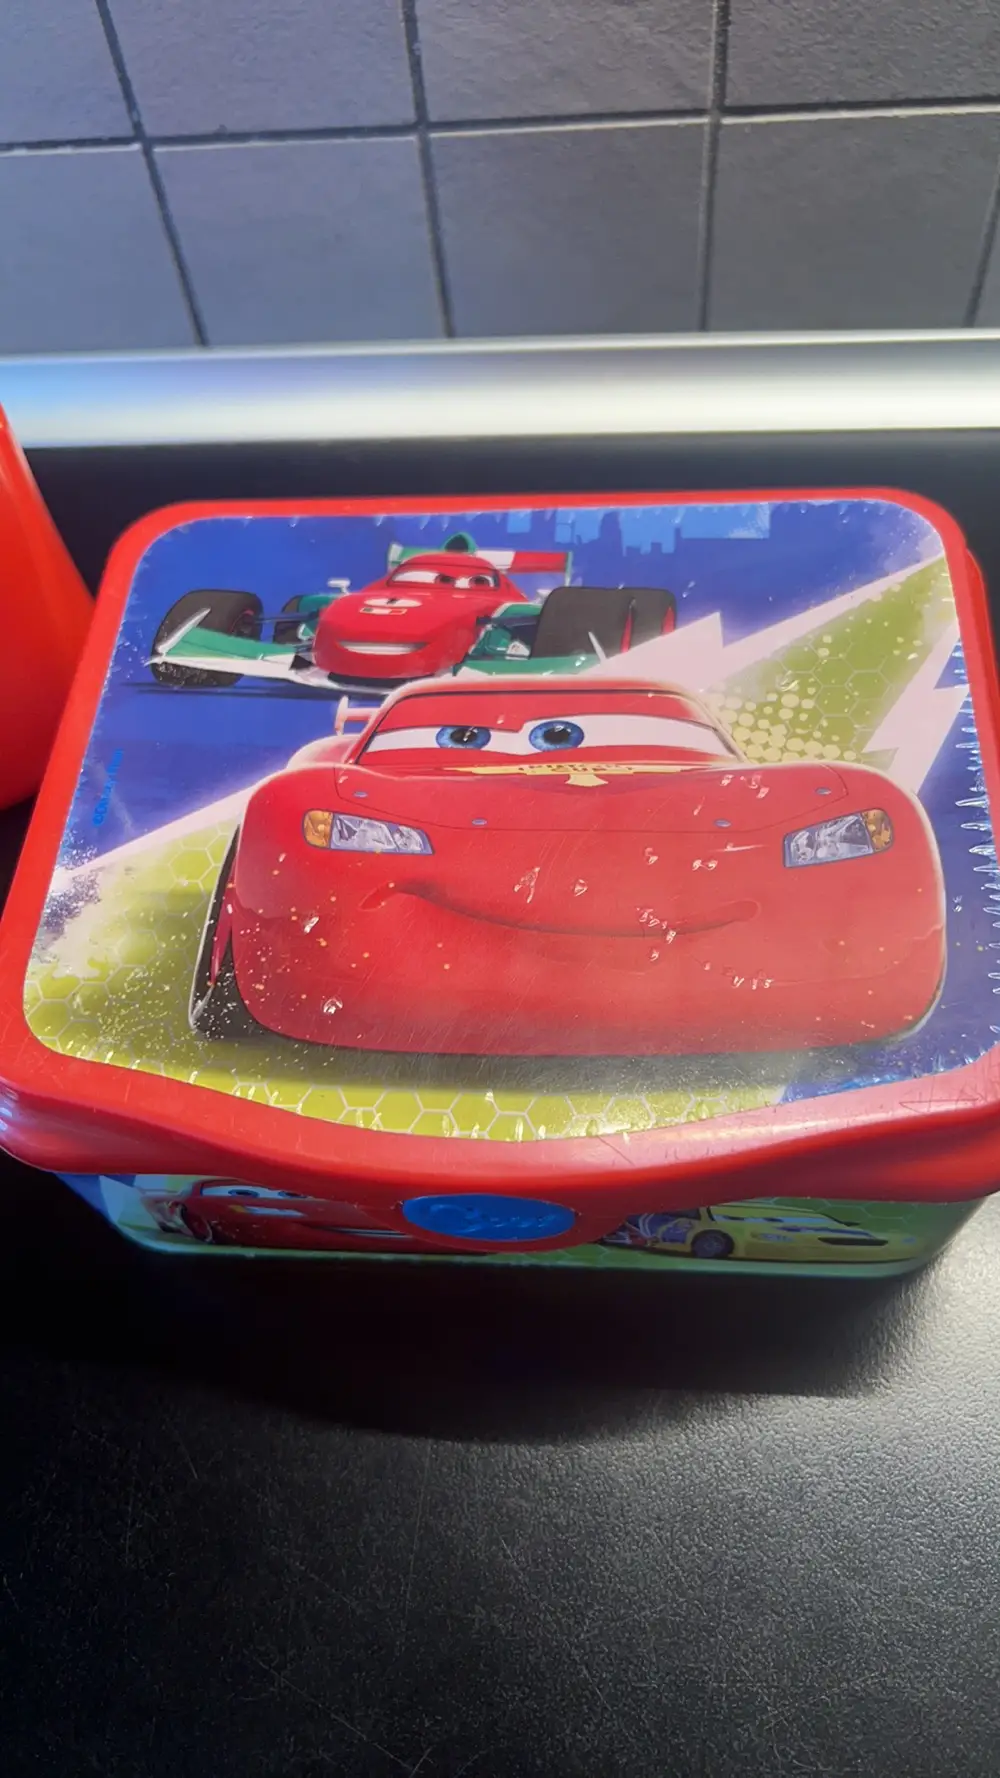 Disney Cars madpakke og dunk